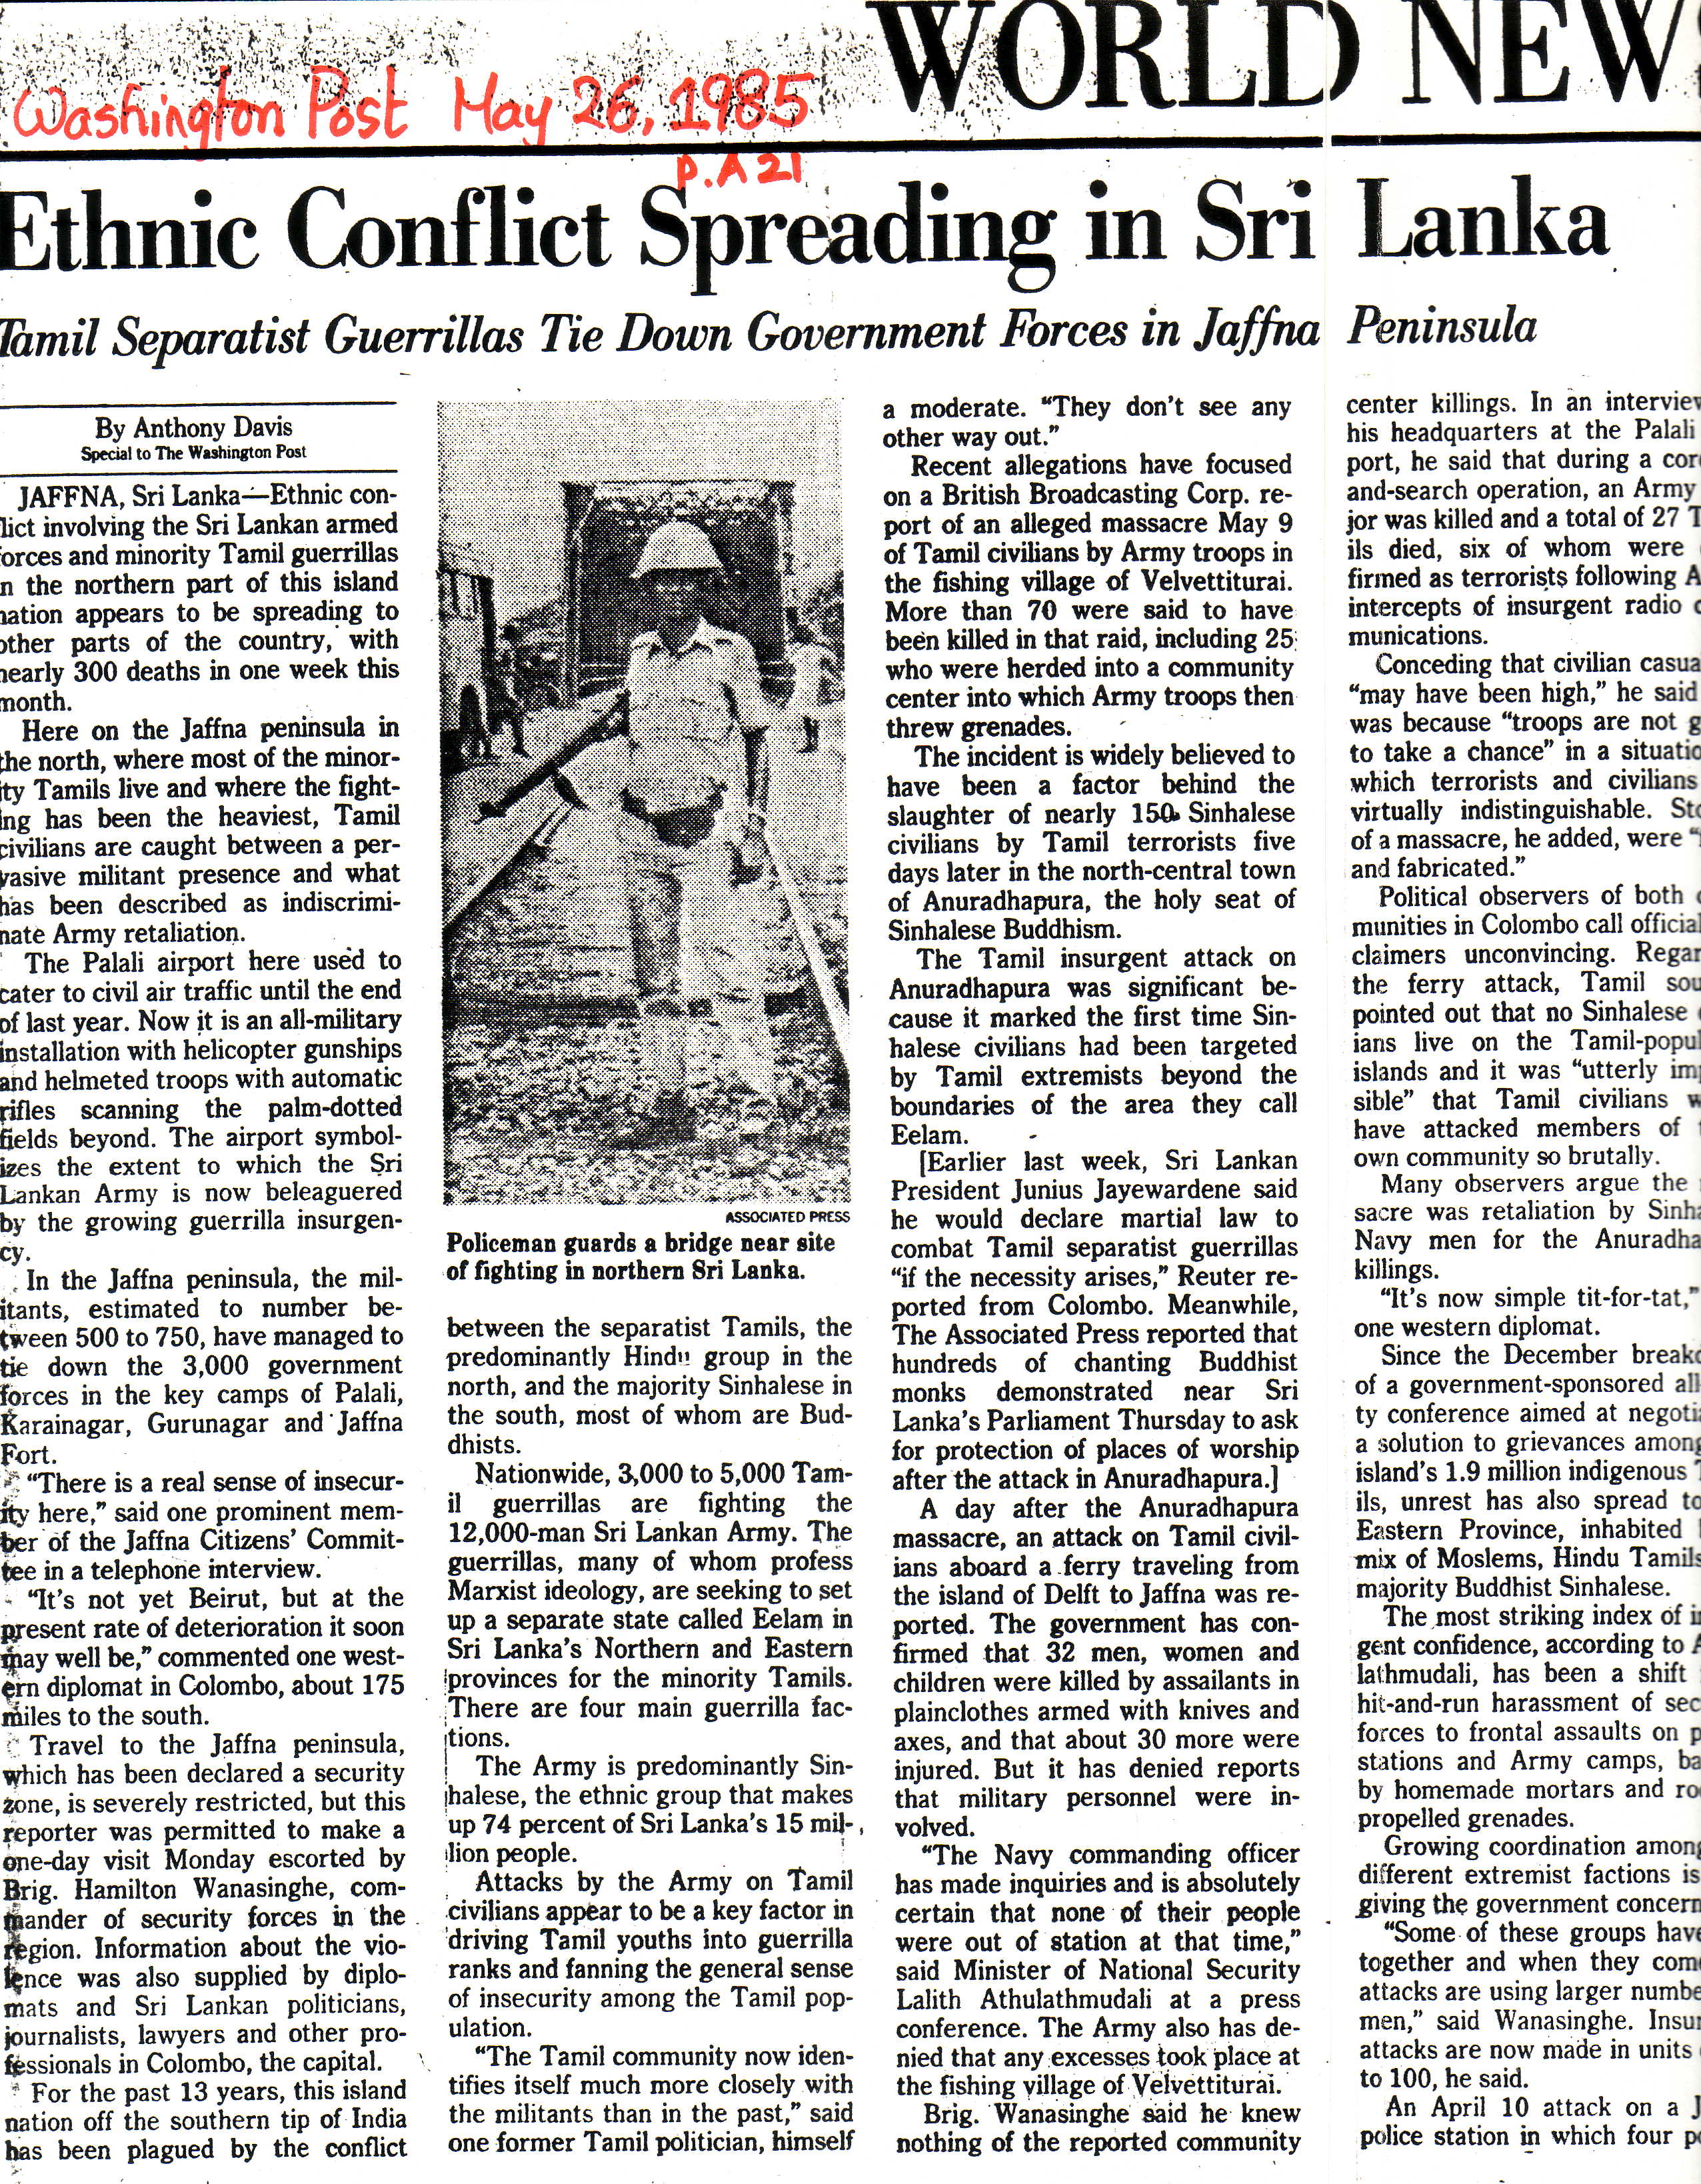 Anthony Davis report May 26 1985 Ethnic Conflict Spreading in Sri Lanka Washington Post